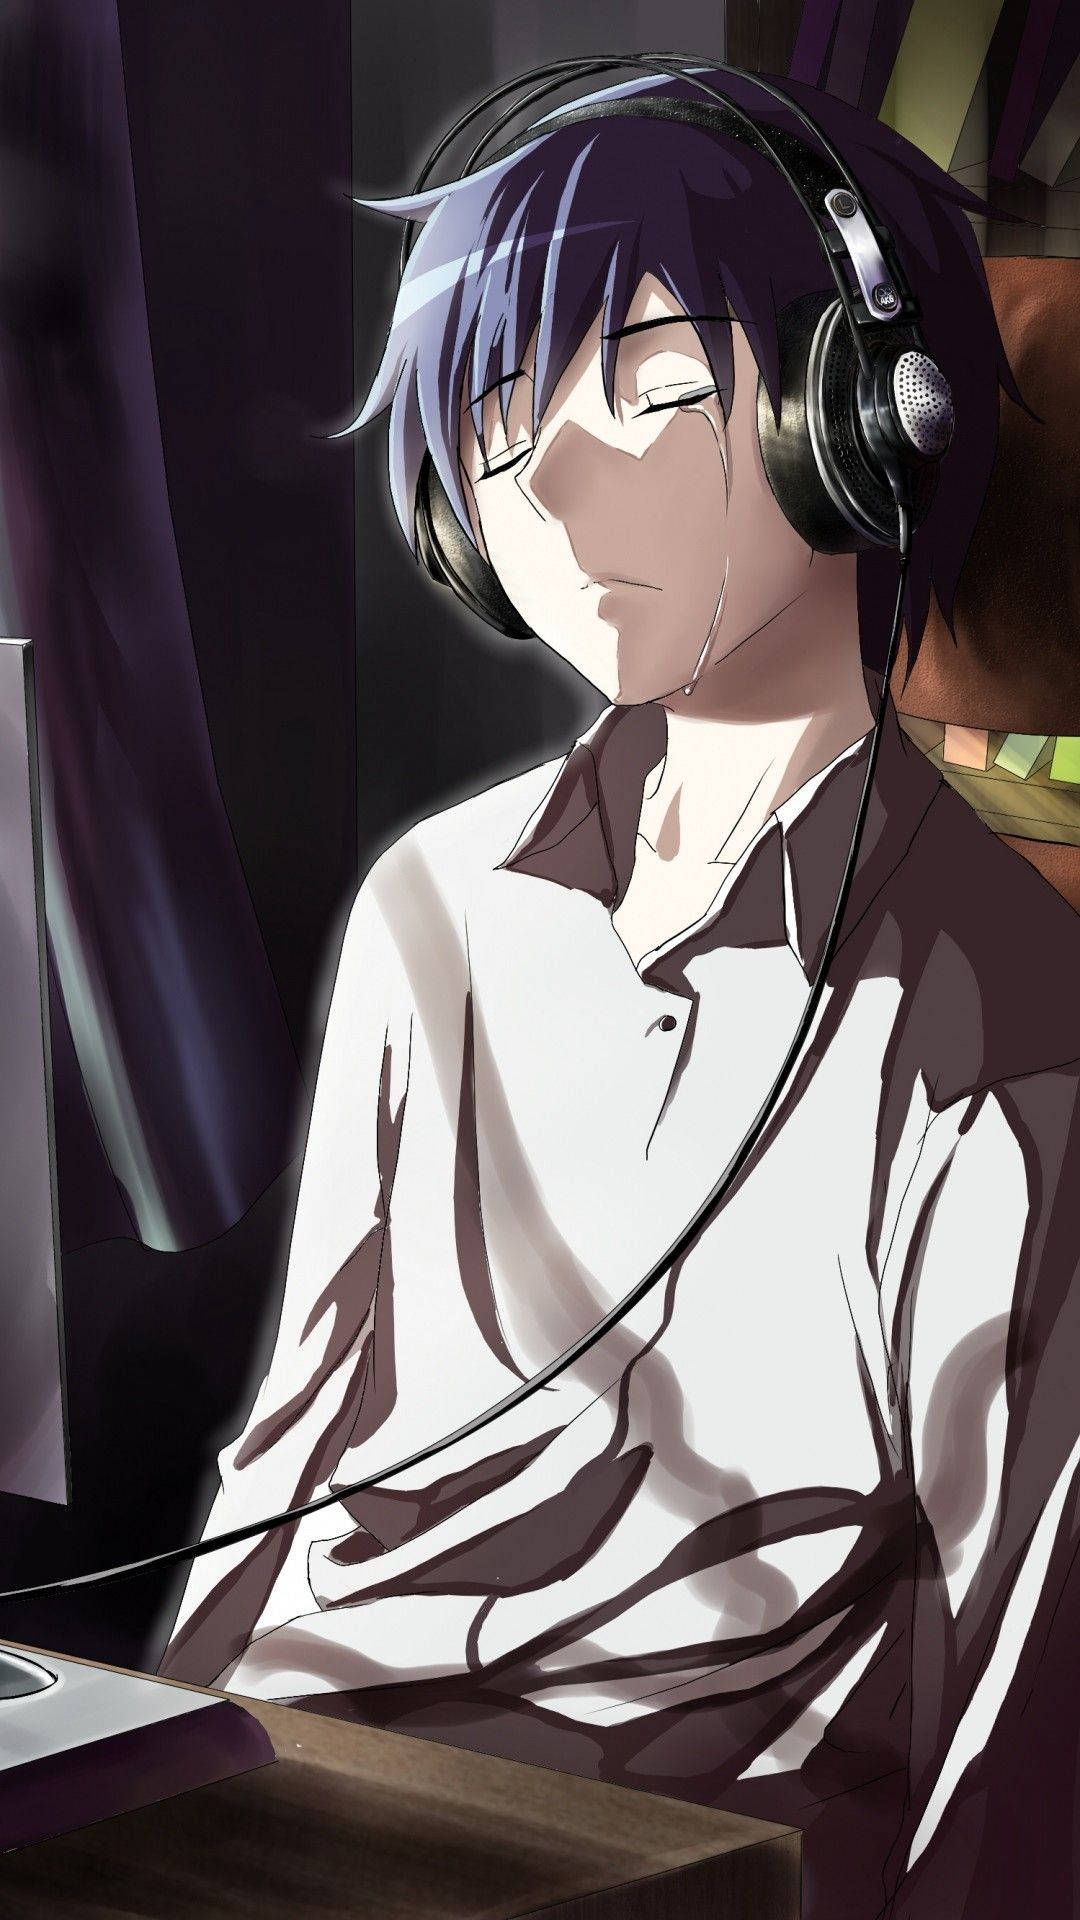 Sad Anime Boy With Headphones Aesthetic Background